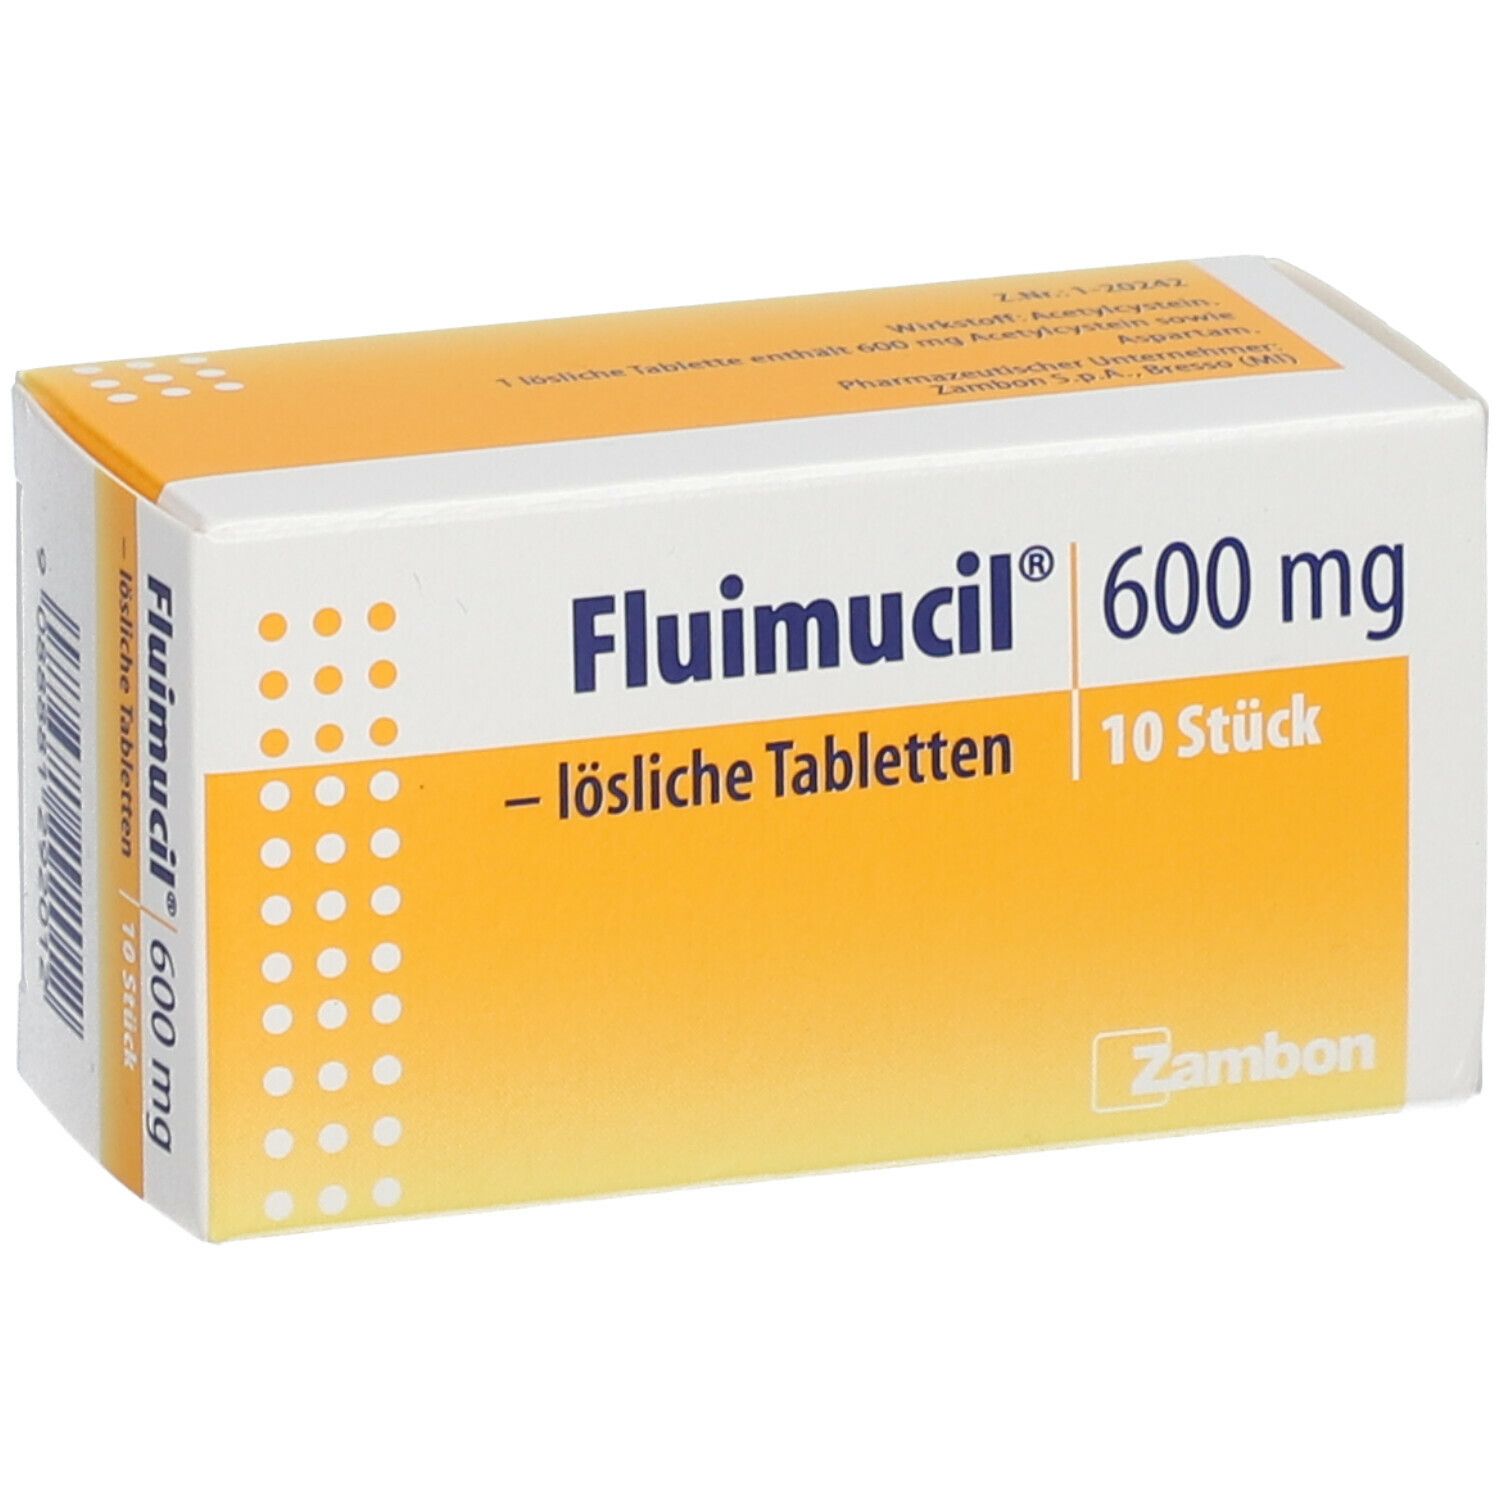 Fluimucil® 600 mg lösliche Tabletten